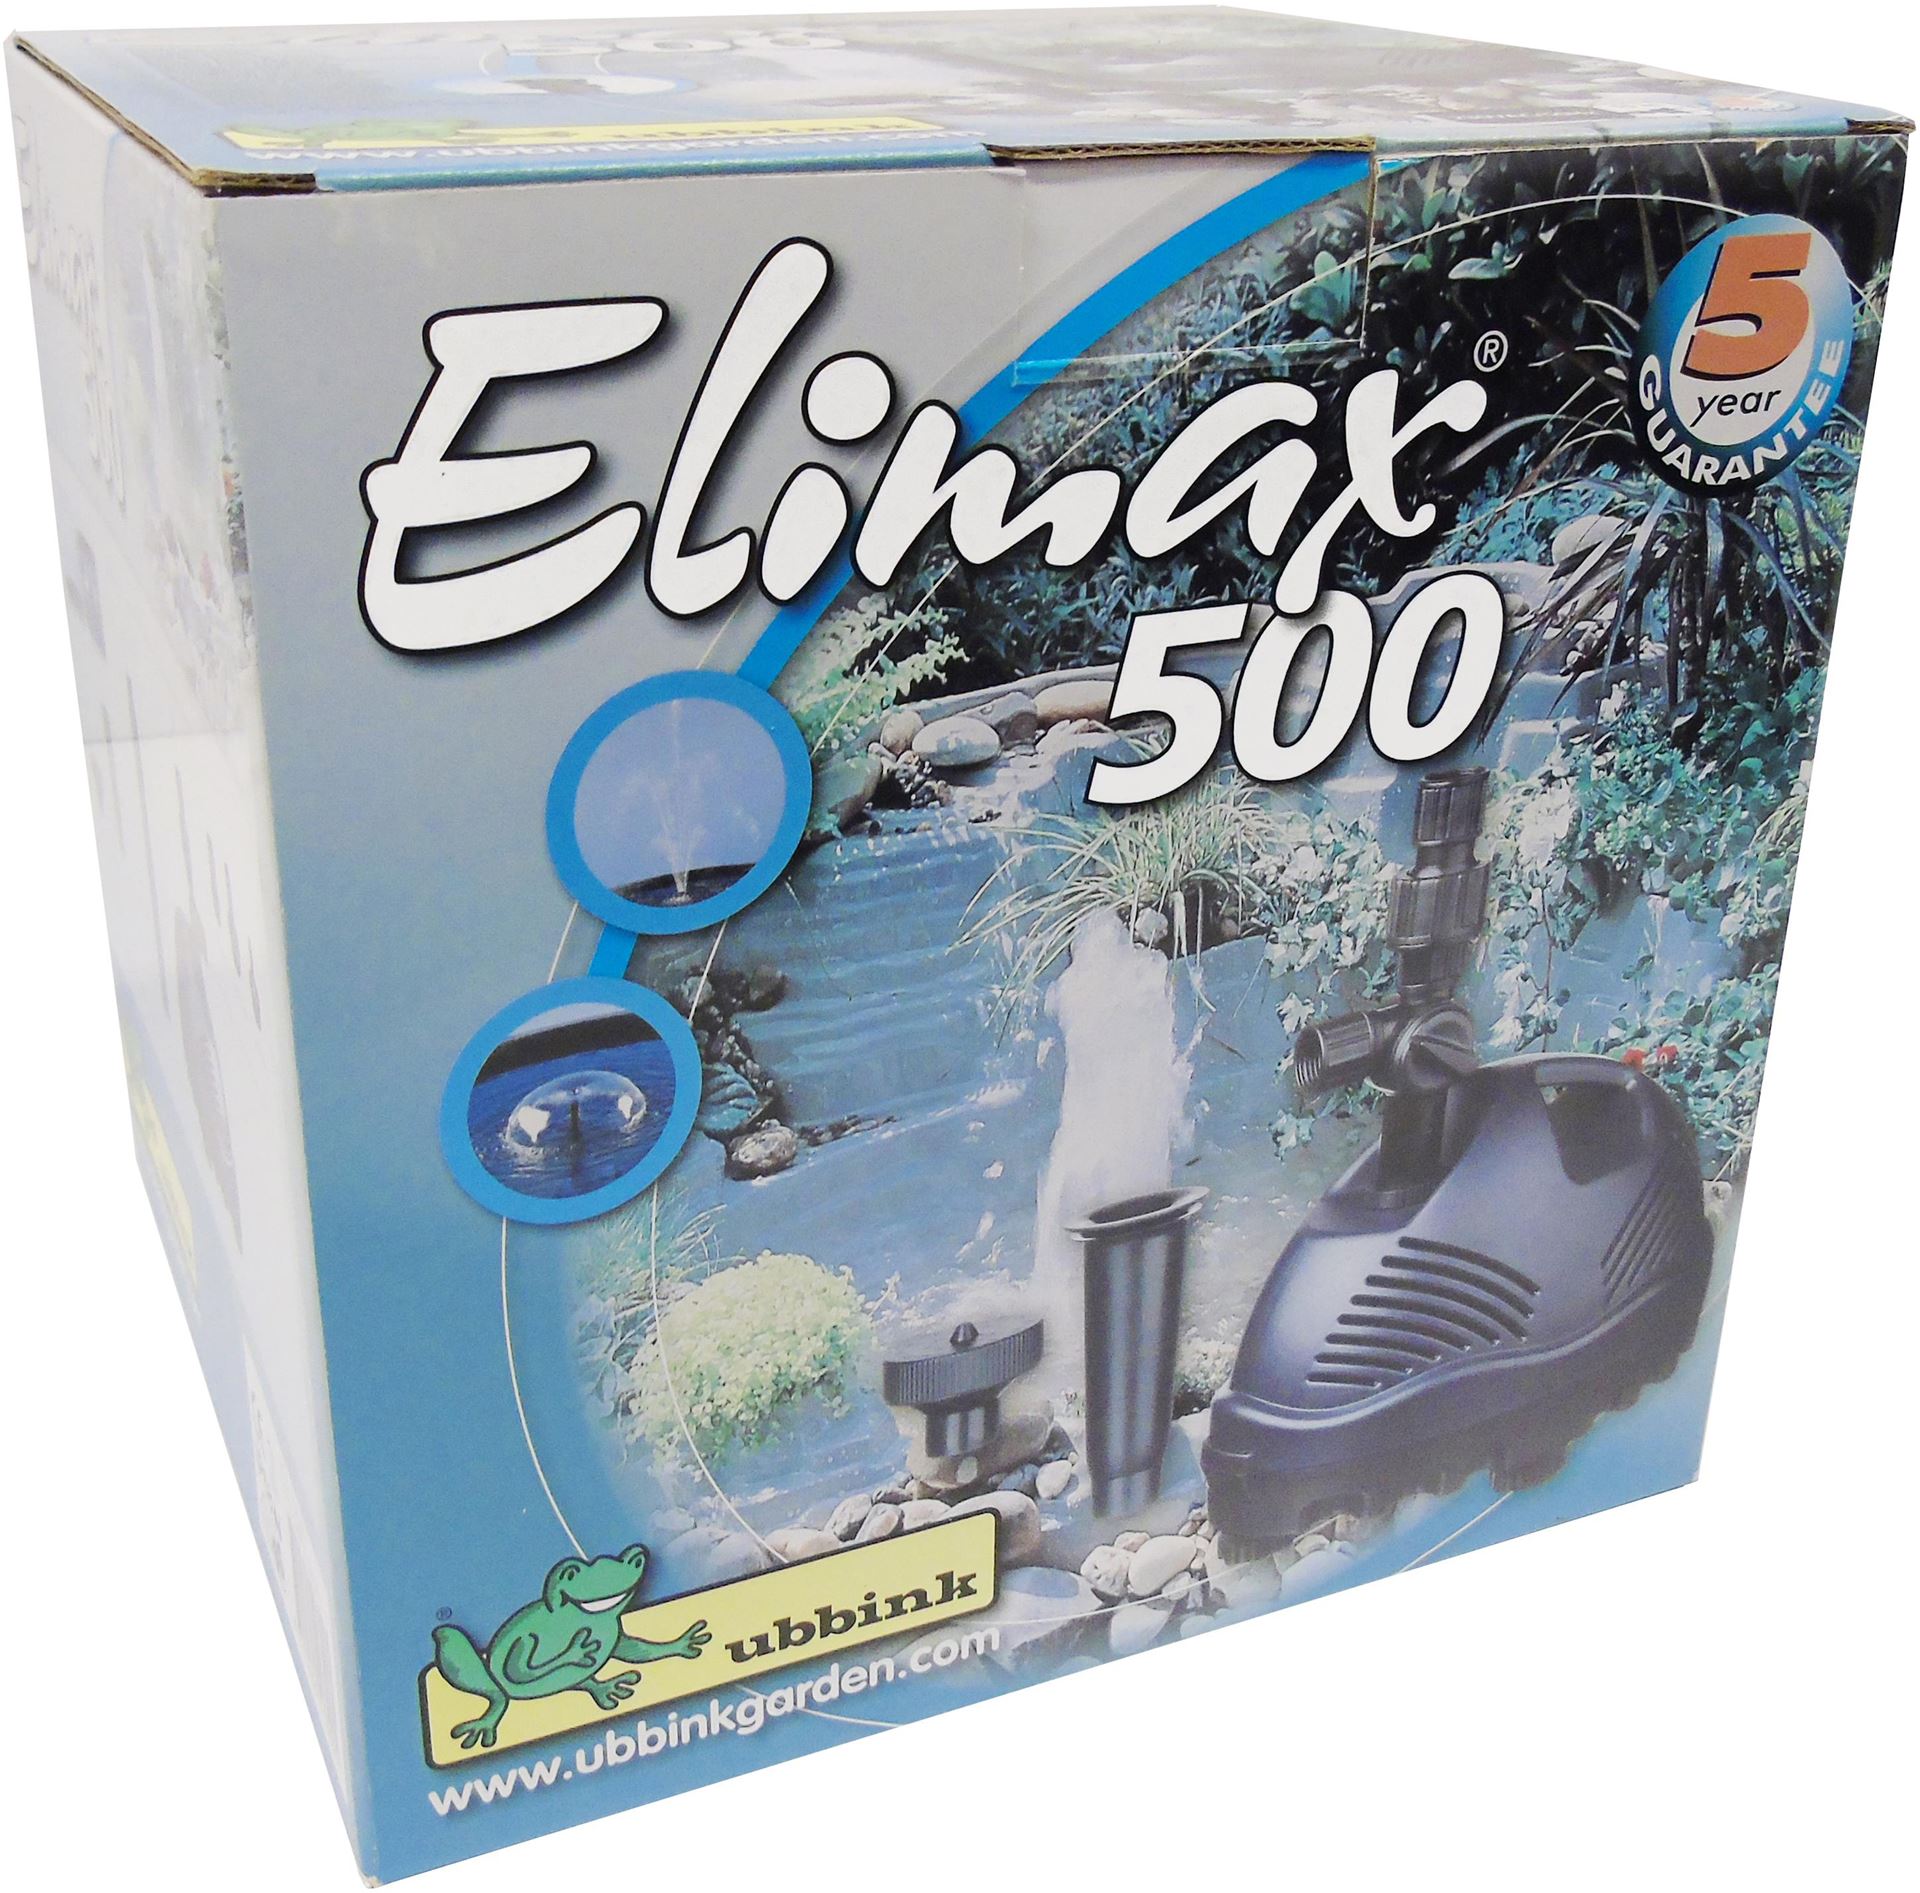 Elimax-500